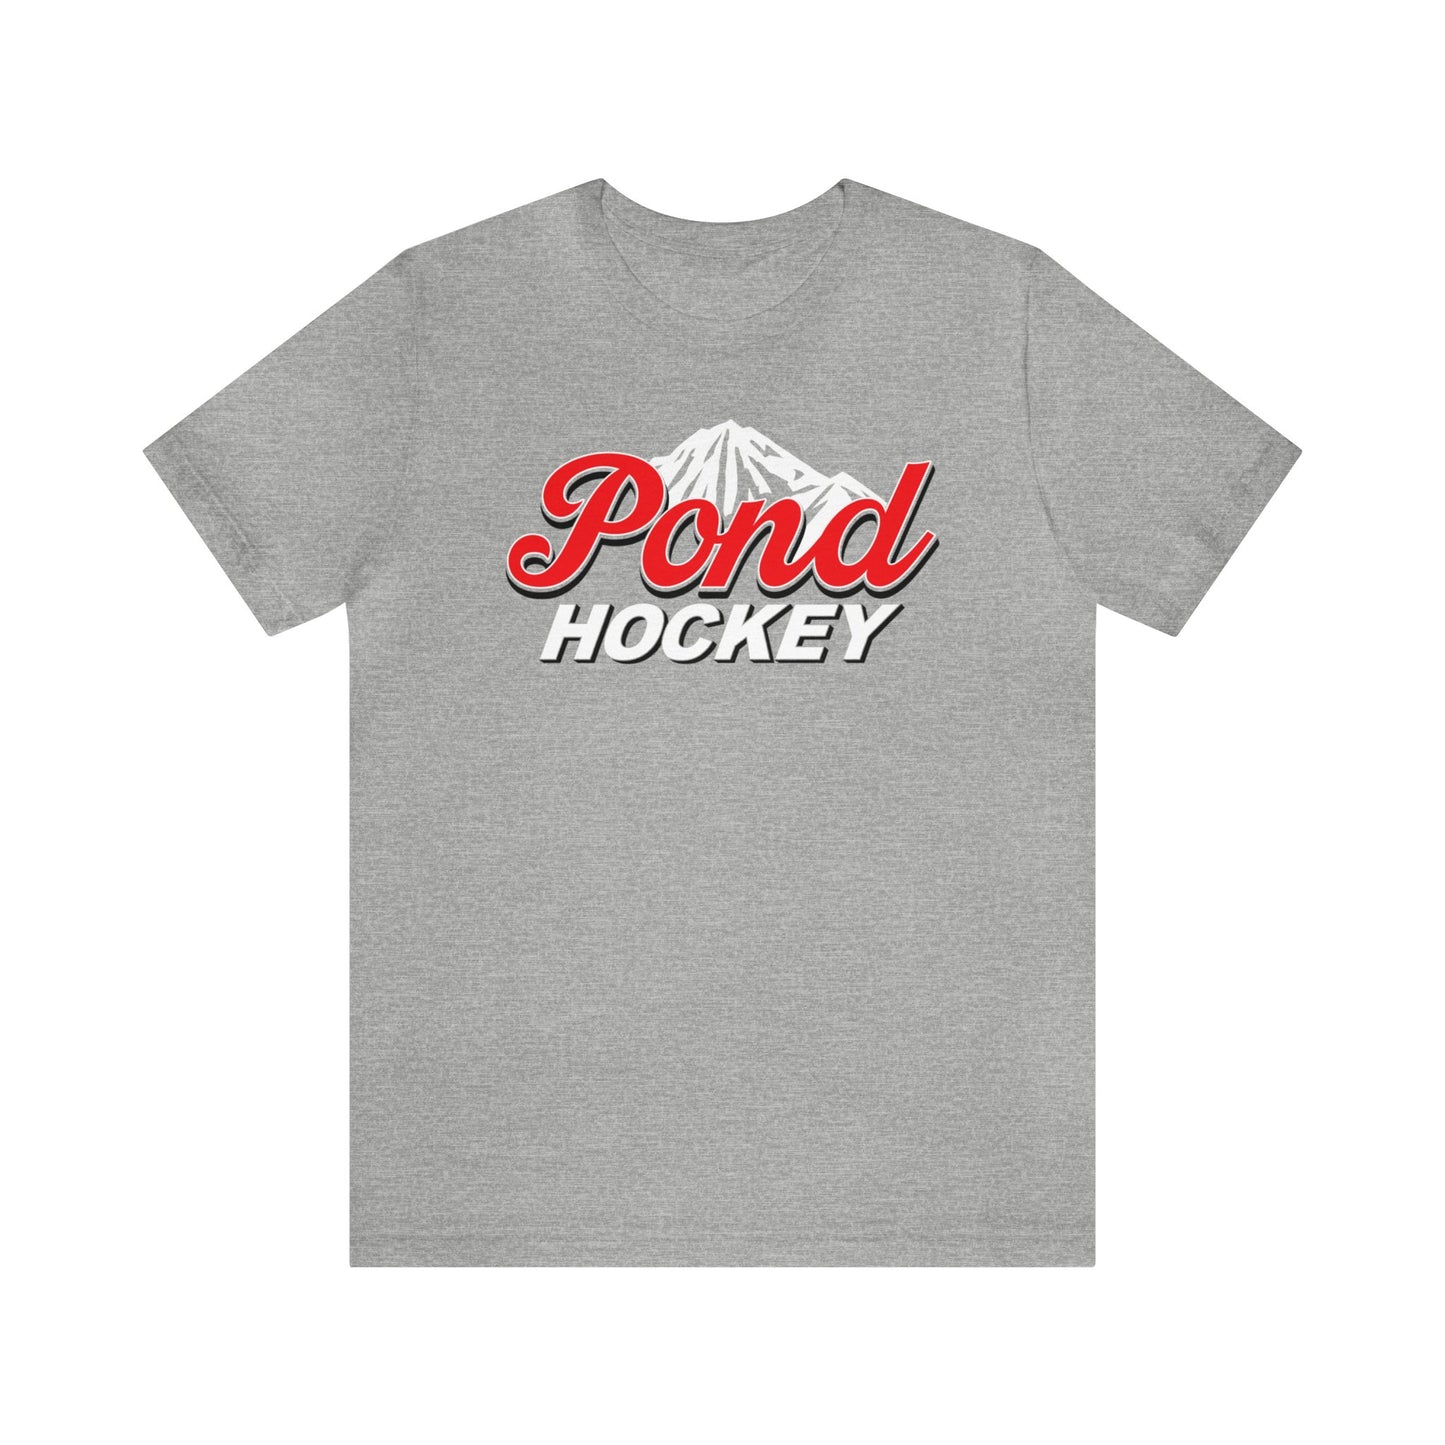 Pond Hockey Beer Shirt